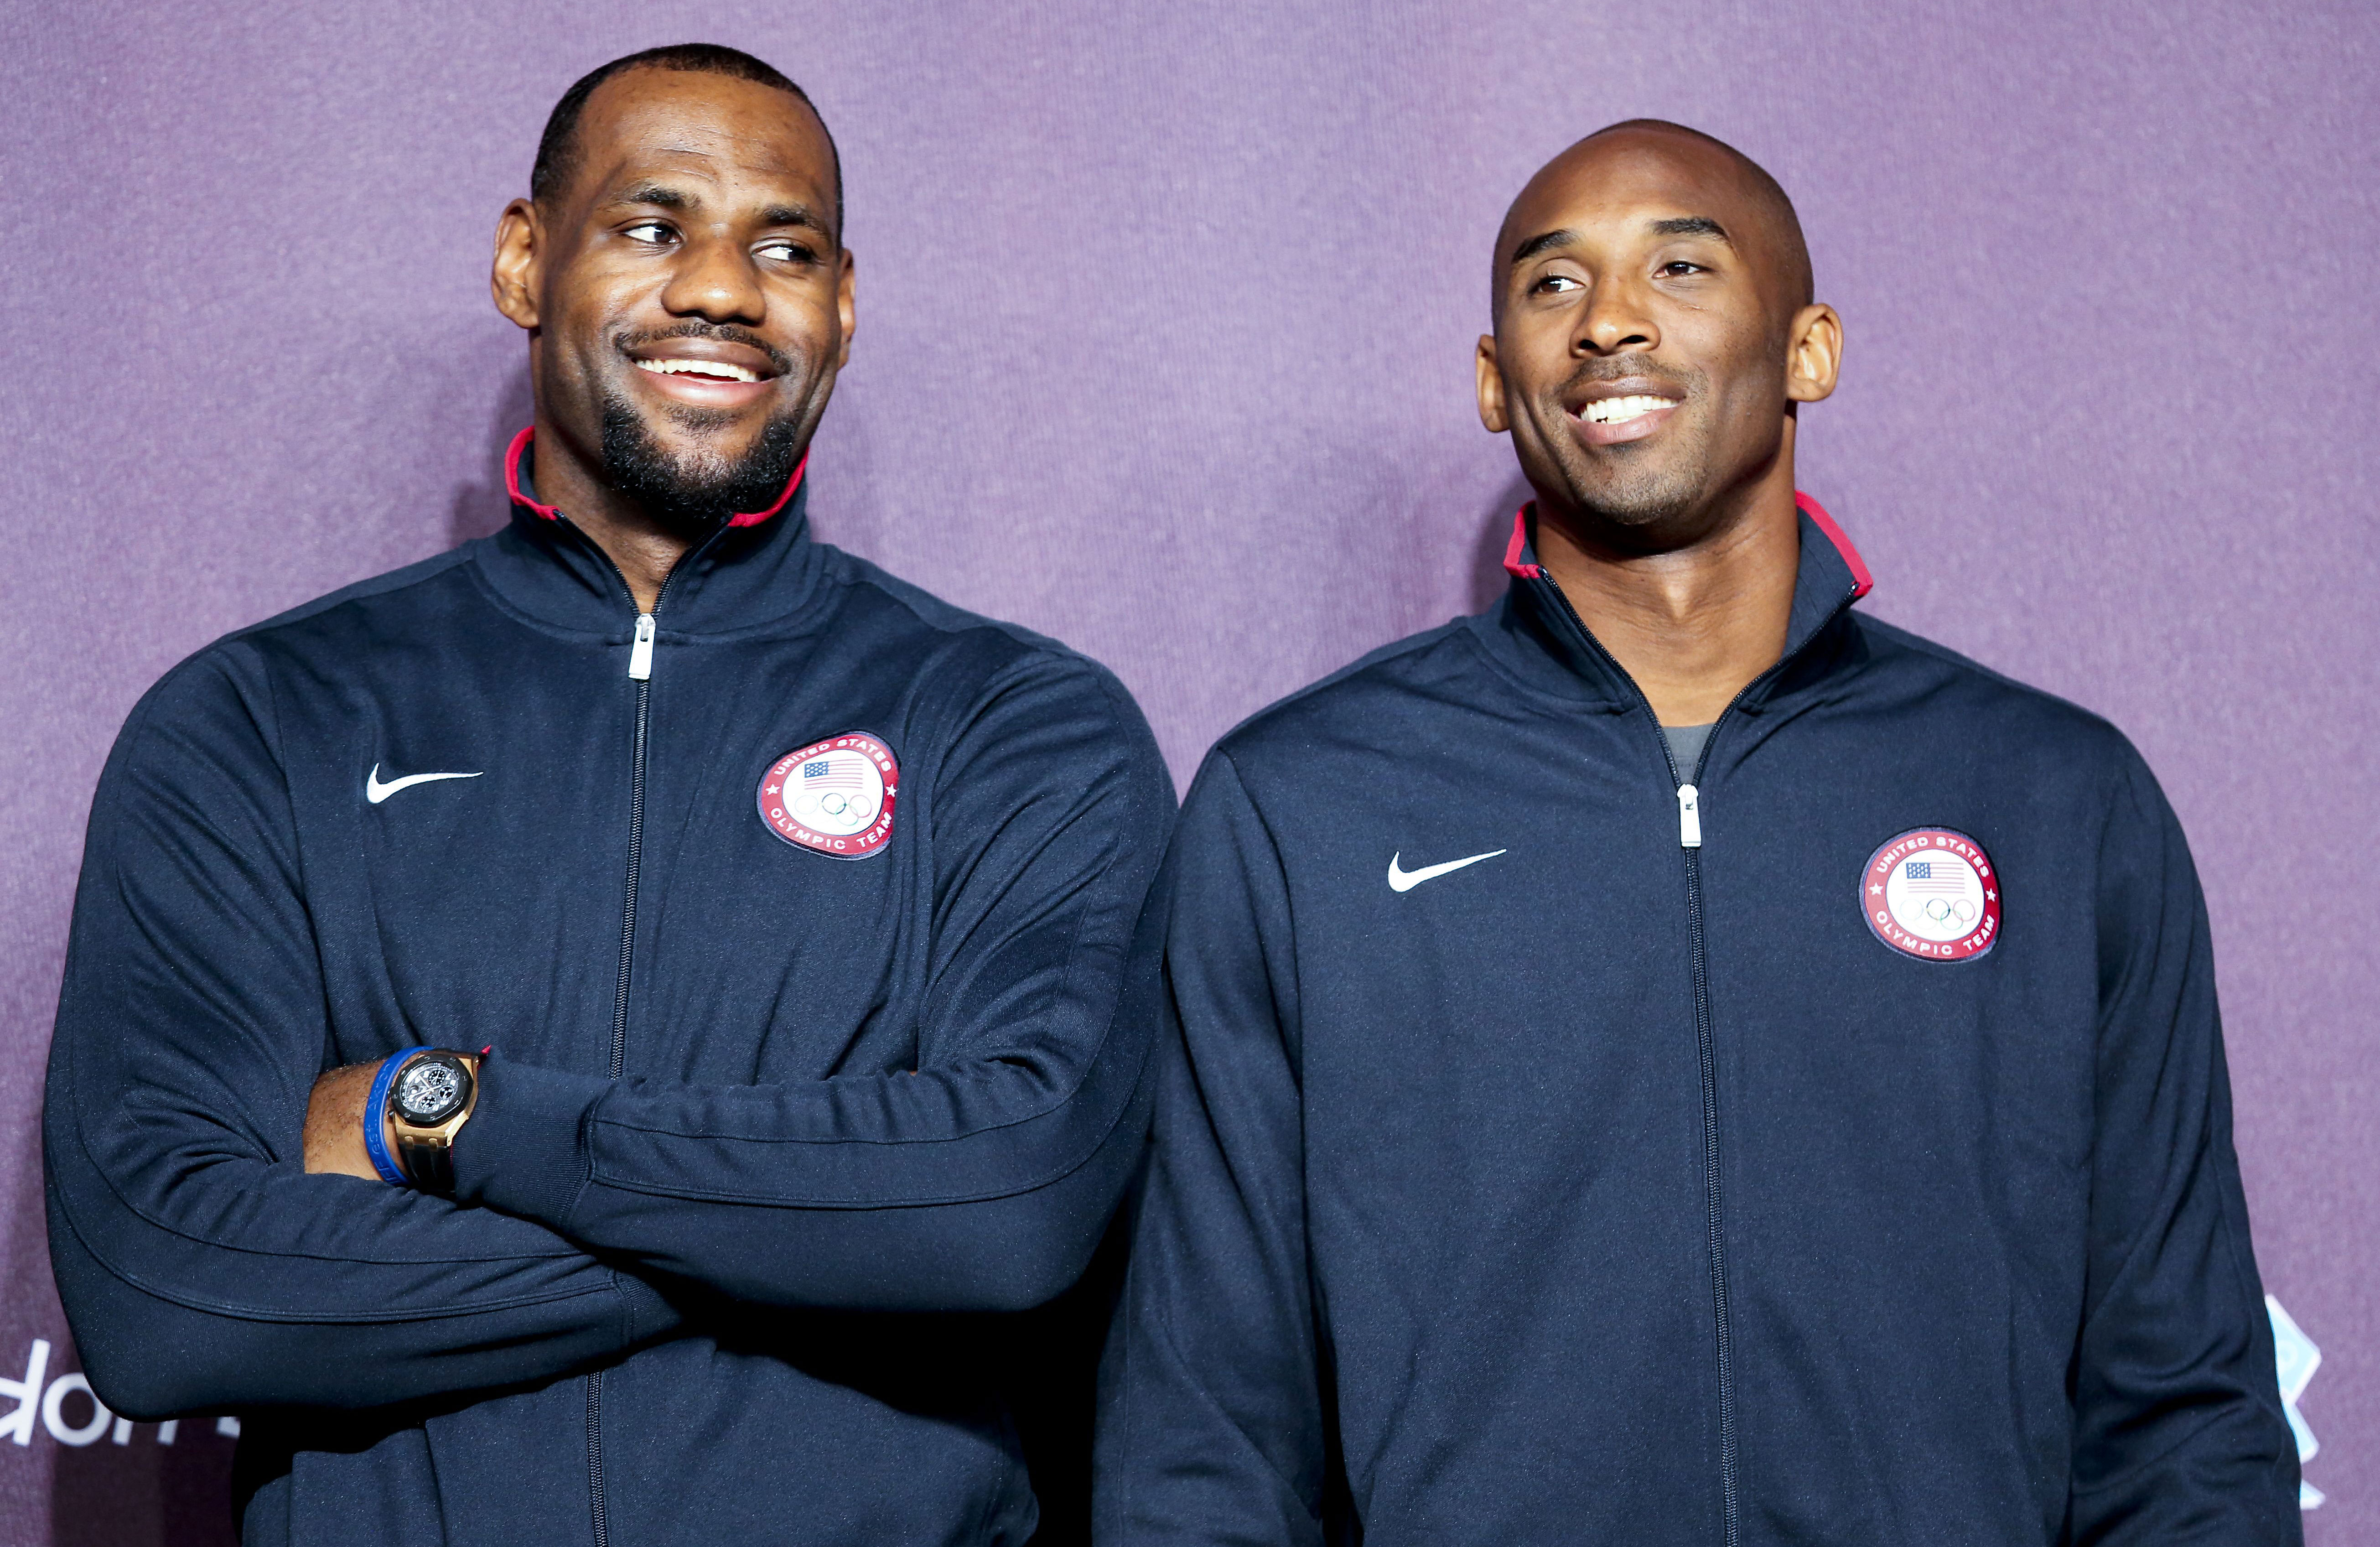 Kobe Bryant tribute: Los Angeles Lakers, LeBron James, remember Kobe  Bryant's legacy - CBS News